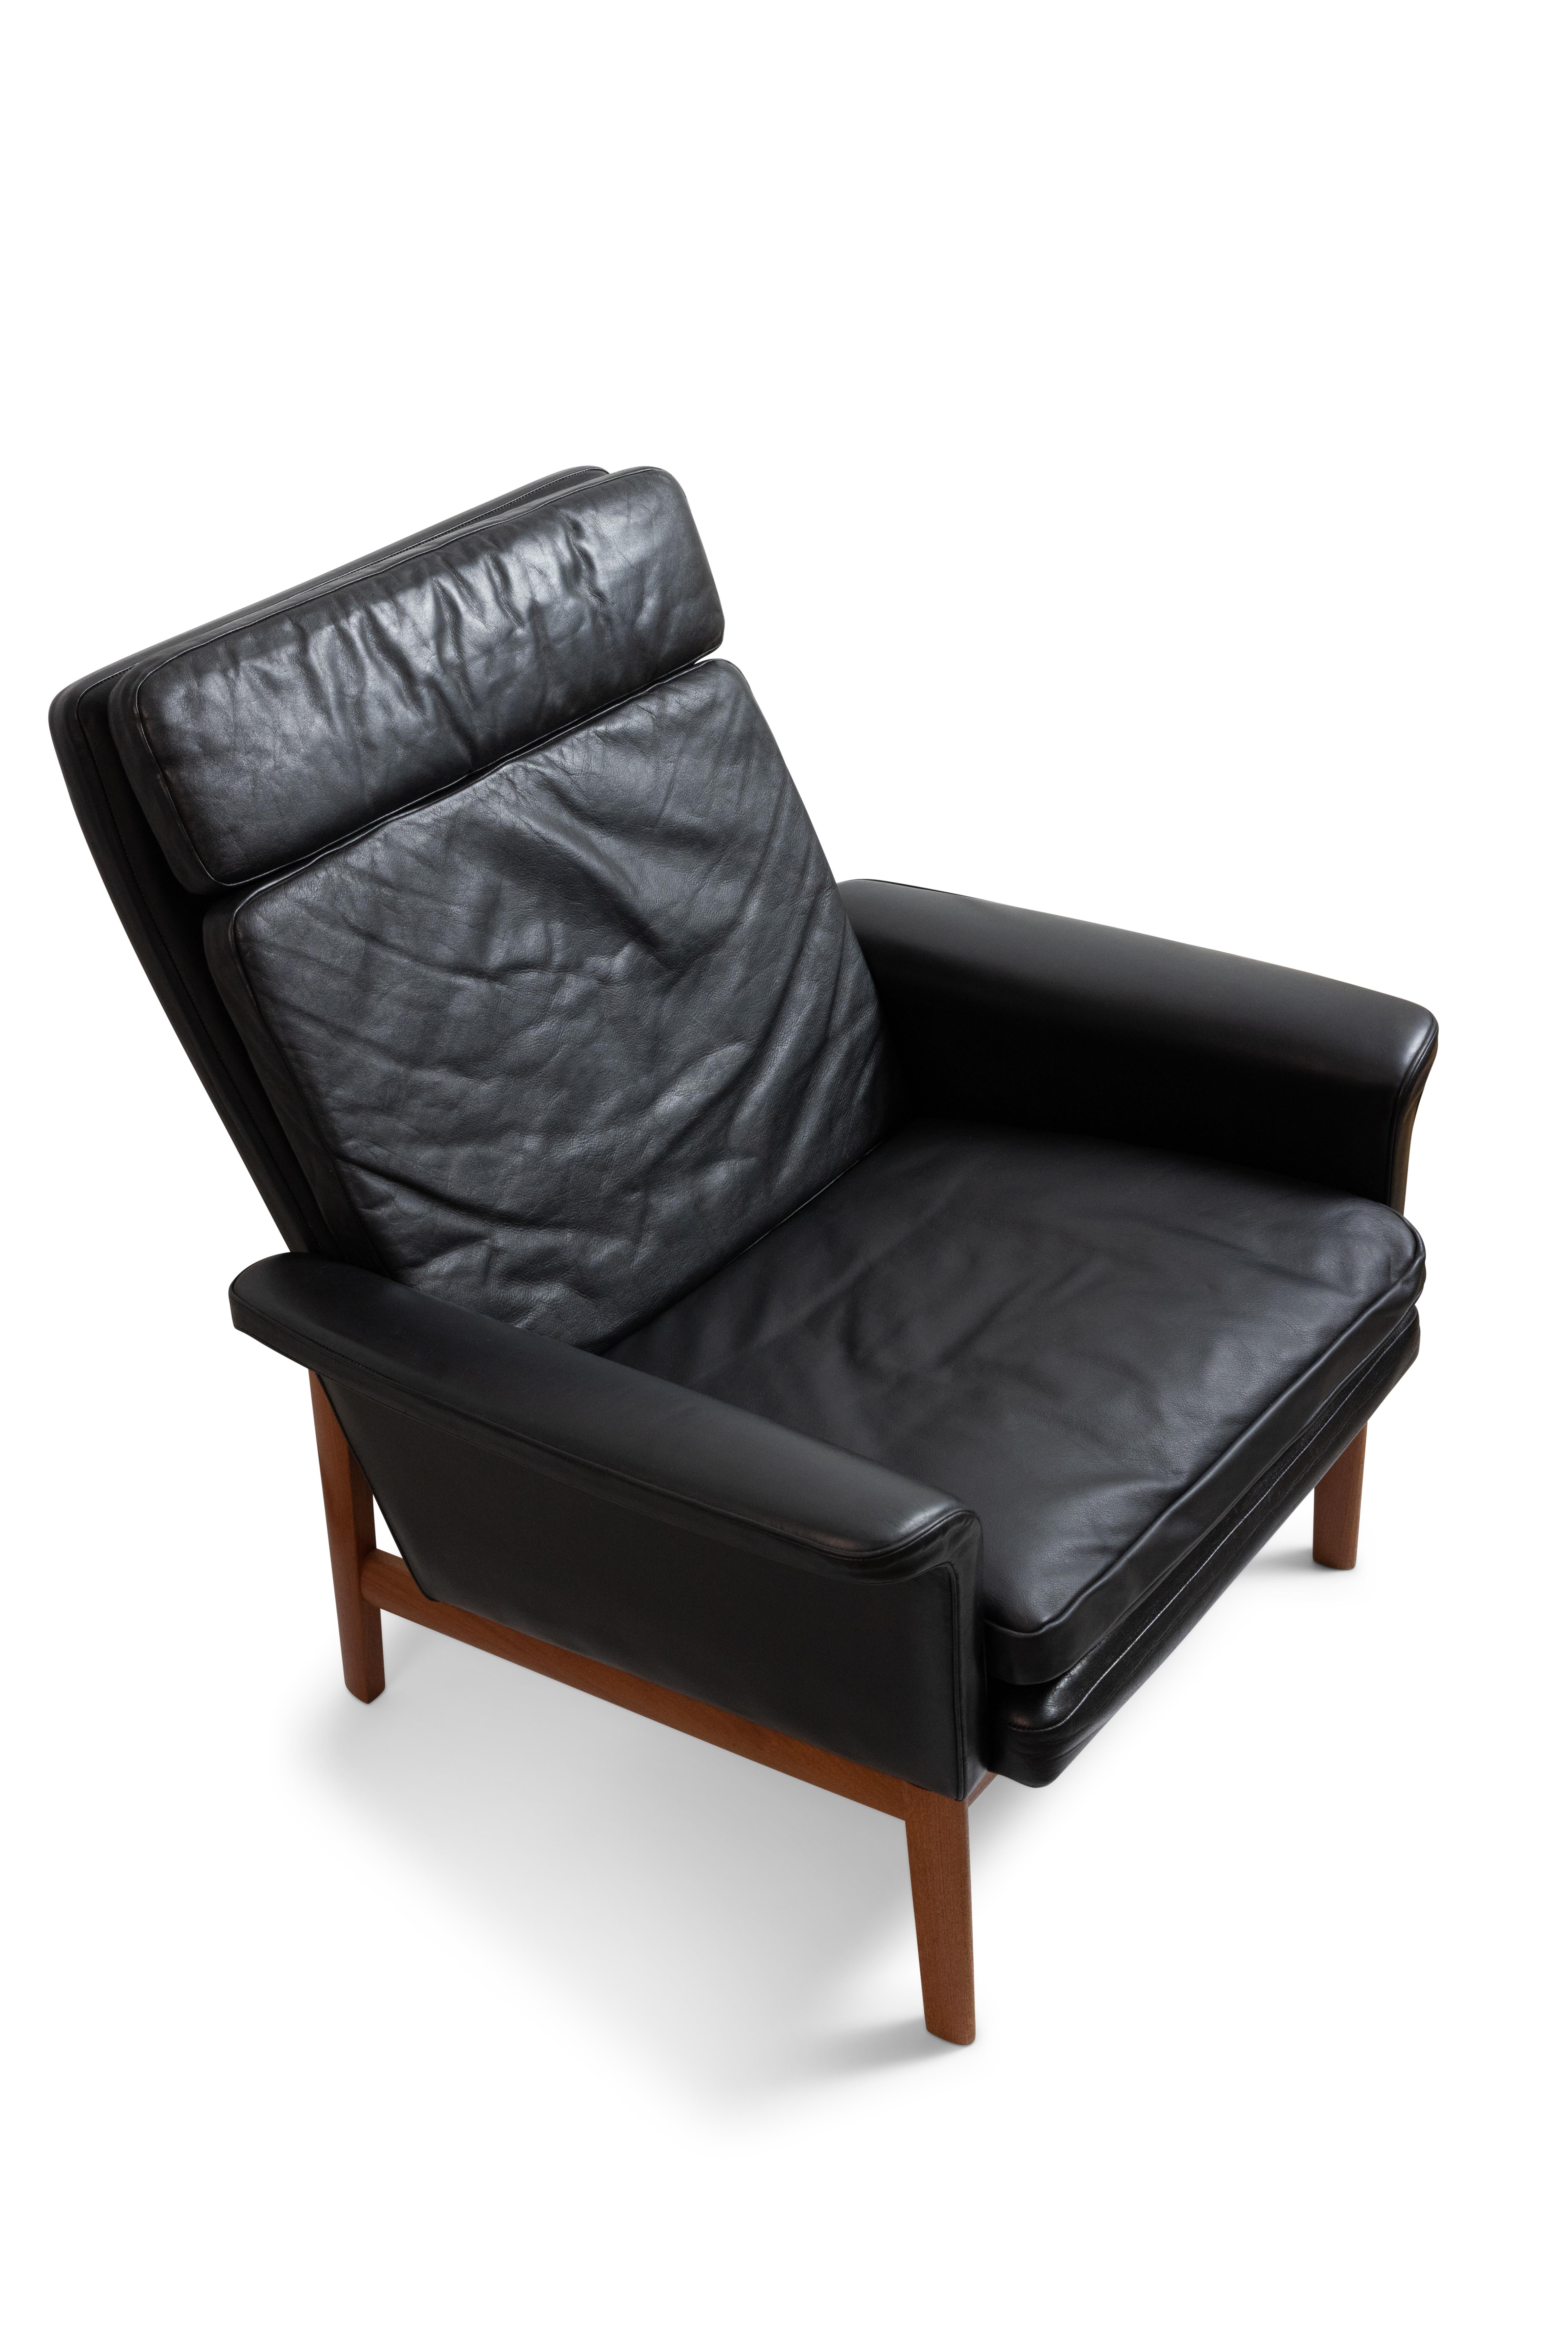 Danish Finn Juhl Three Seat Sofa with Original Black Leather, Model 218/3, Denmark For Sale